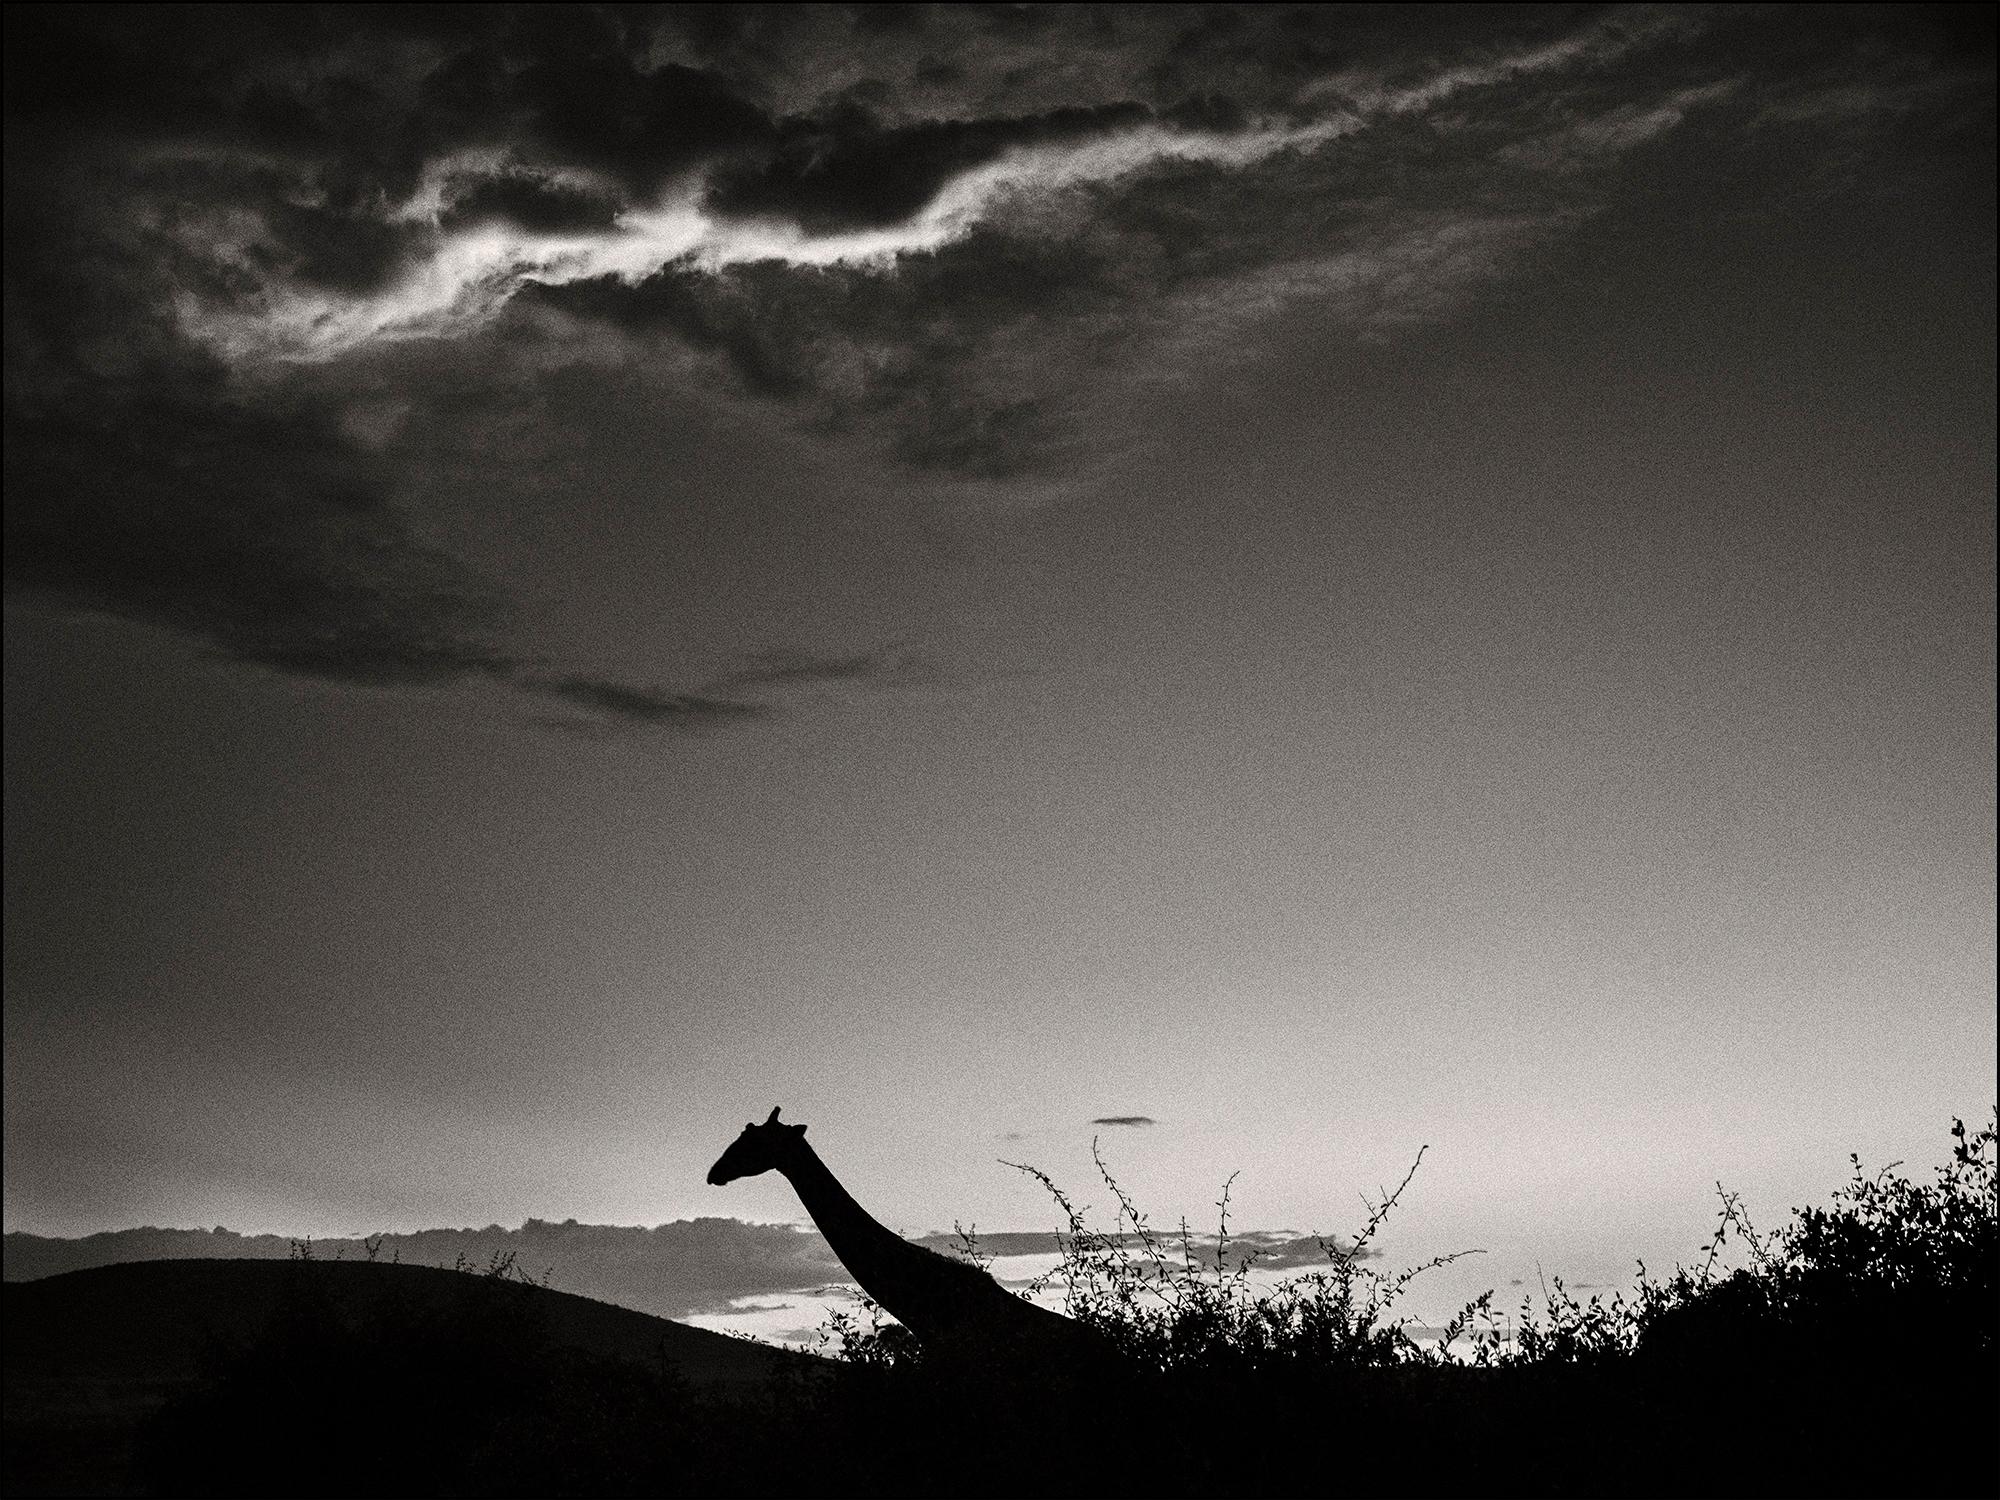 Joachim Schmeisser Landscape Photograph - The dark Knight, animal, wildlife, black and white photography, Giraffe